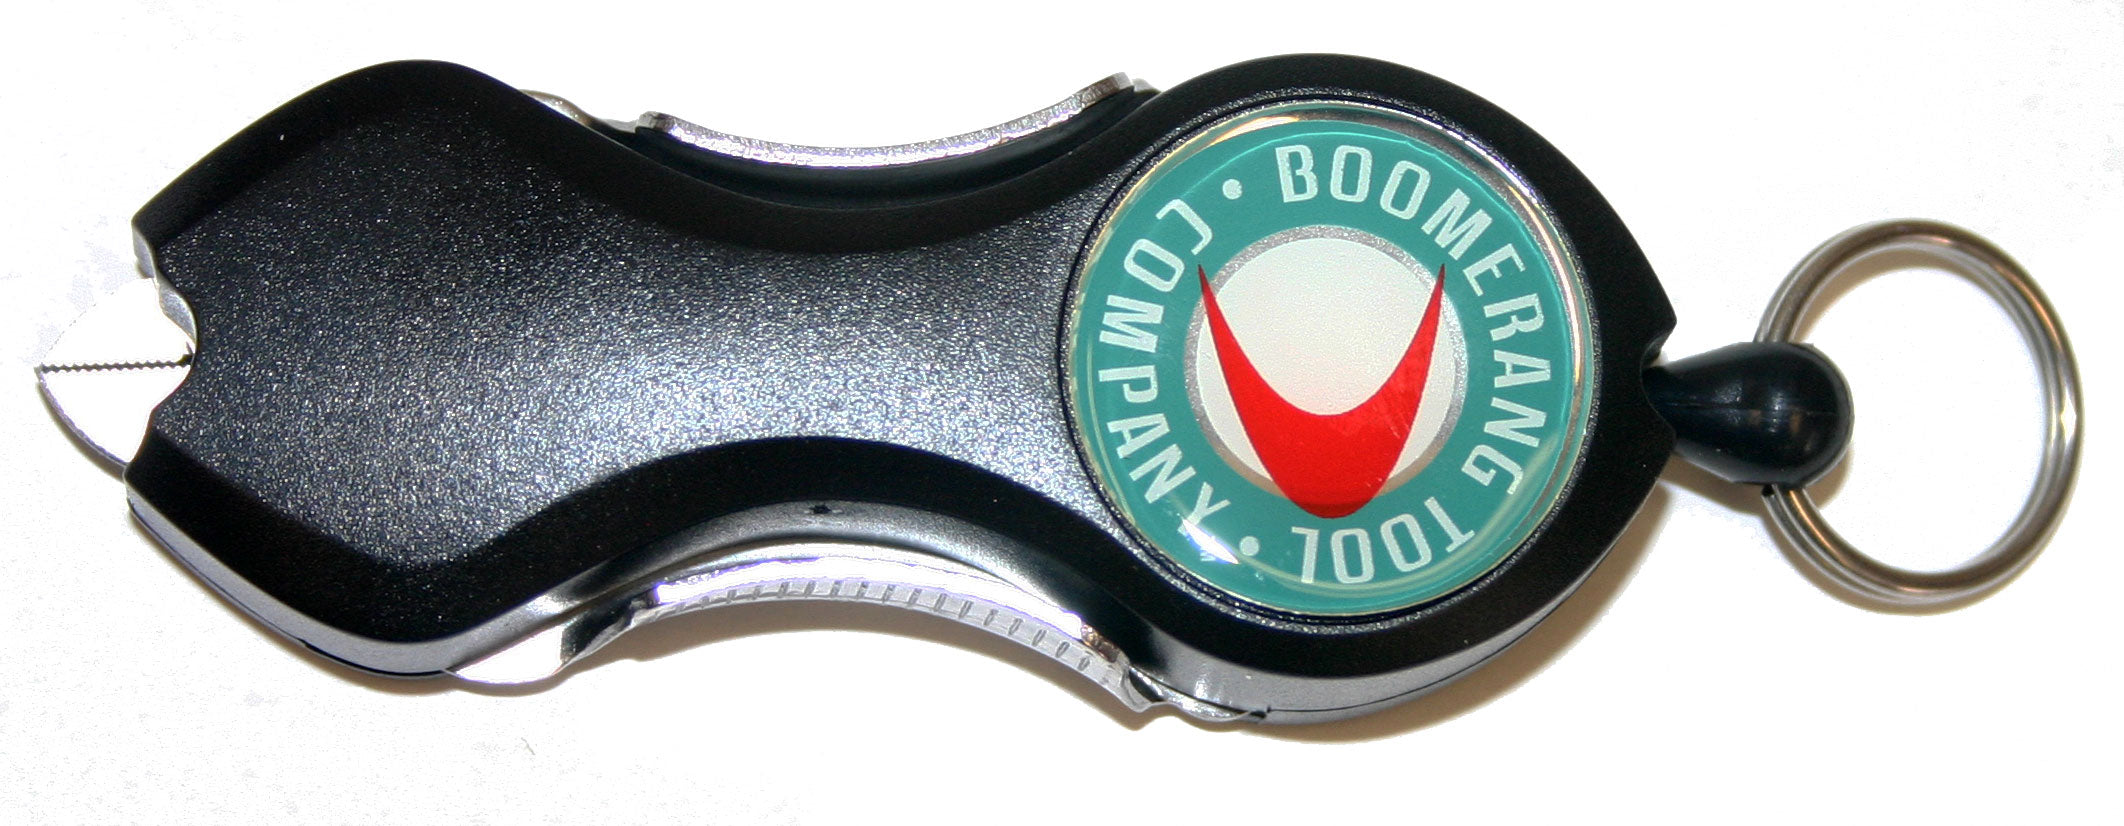 Boomerang The Original Snip Line Cutter, Black